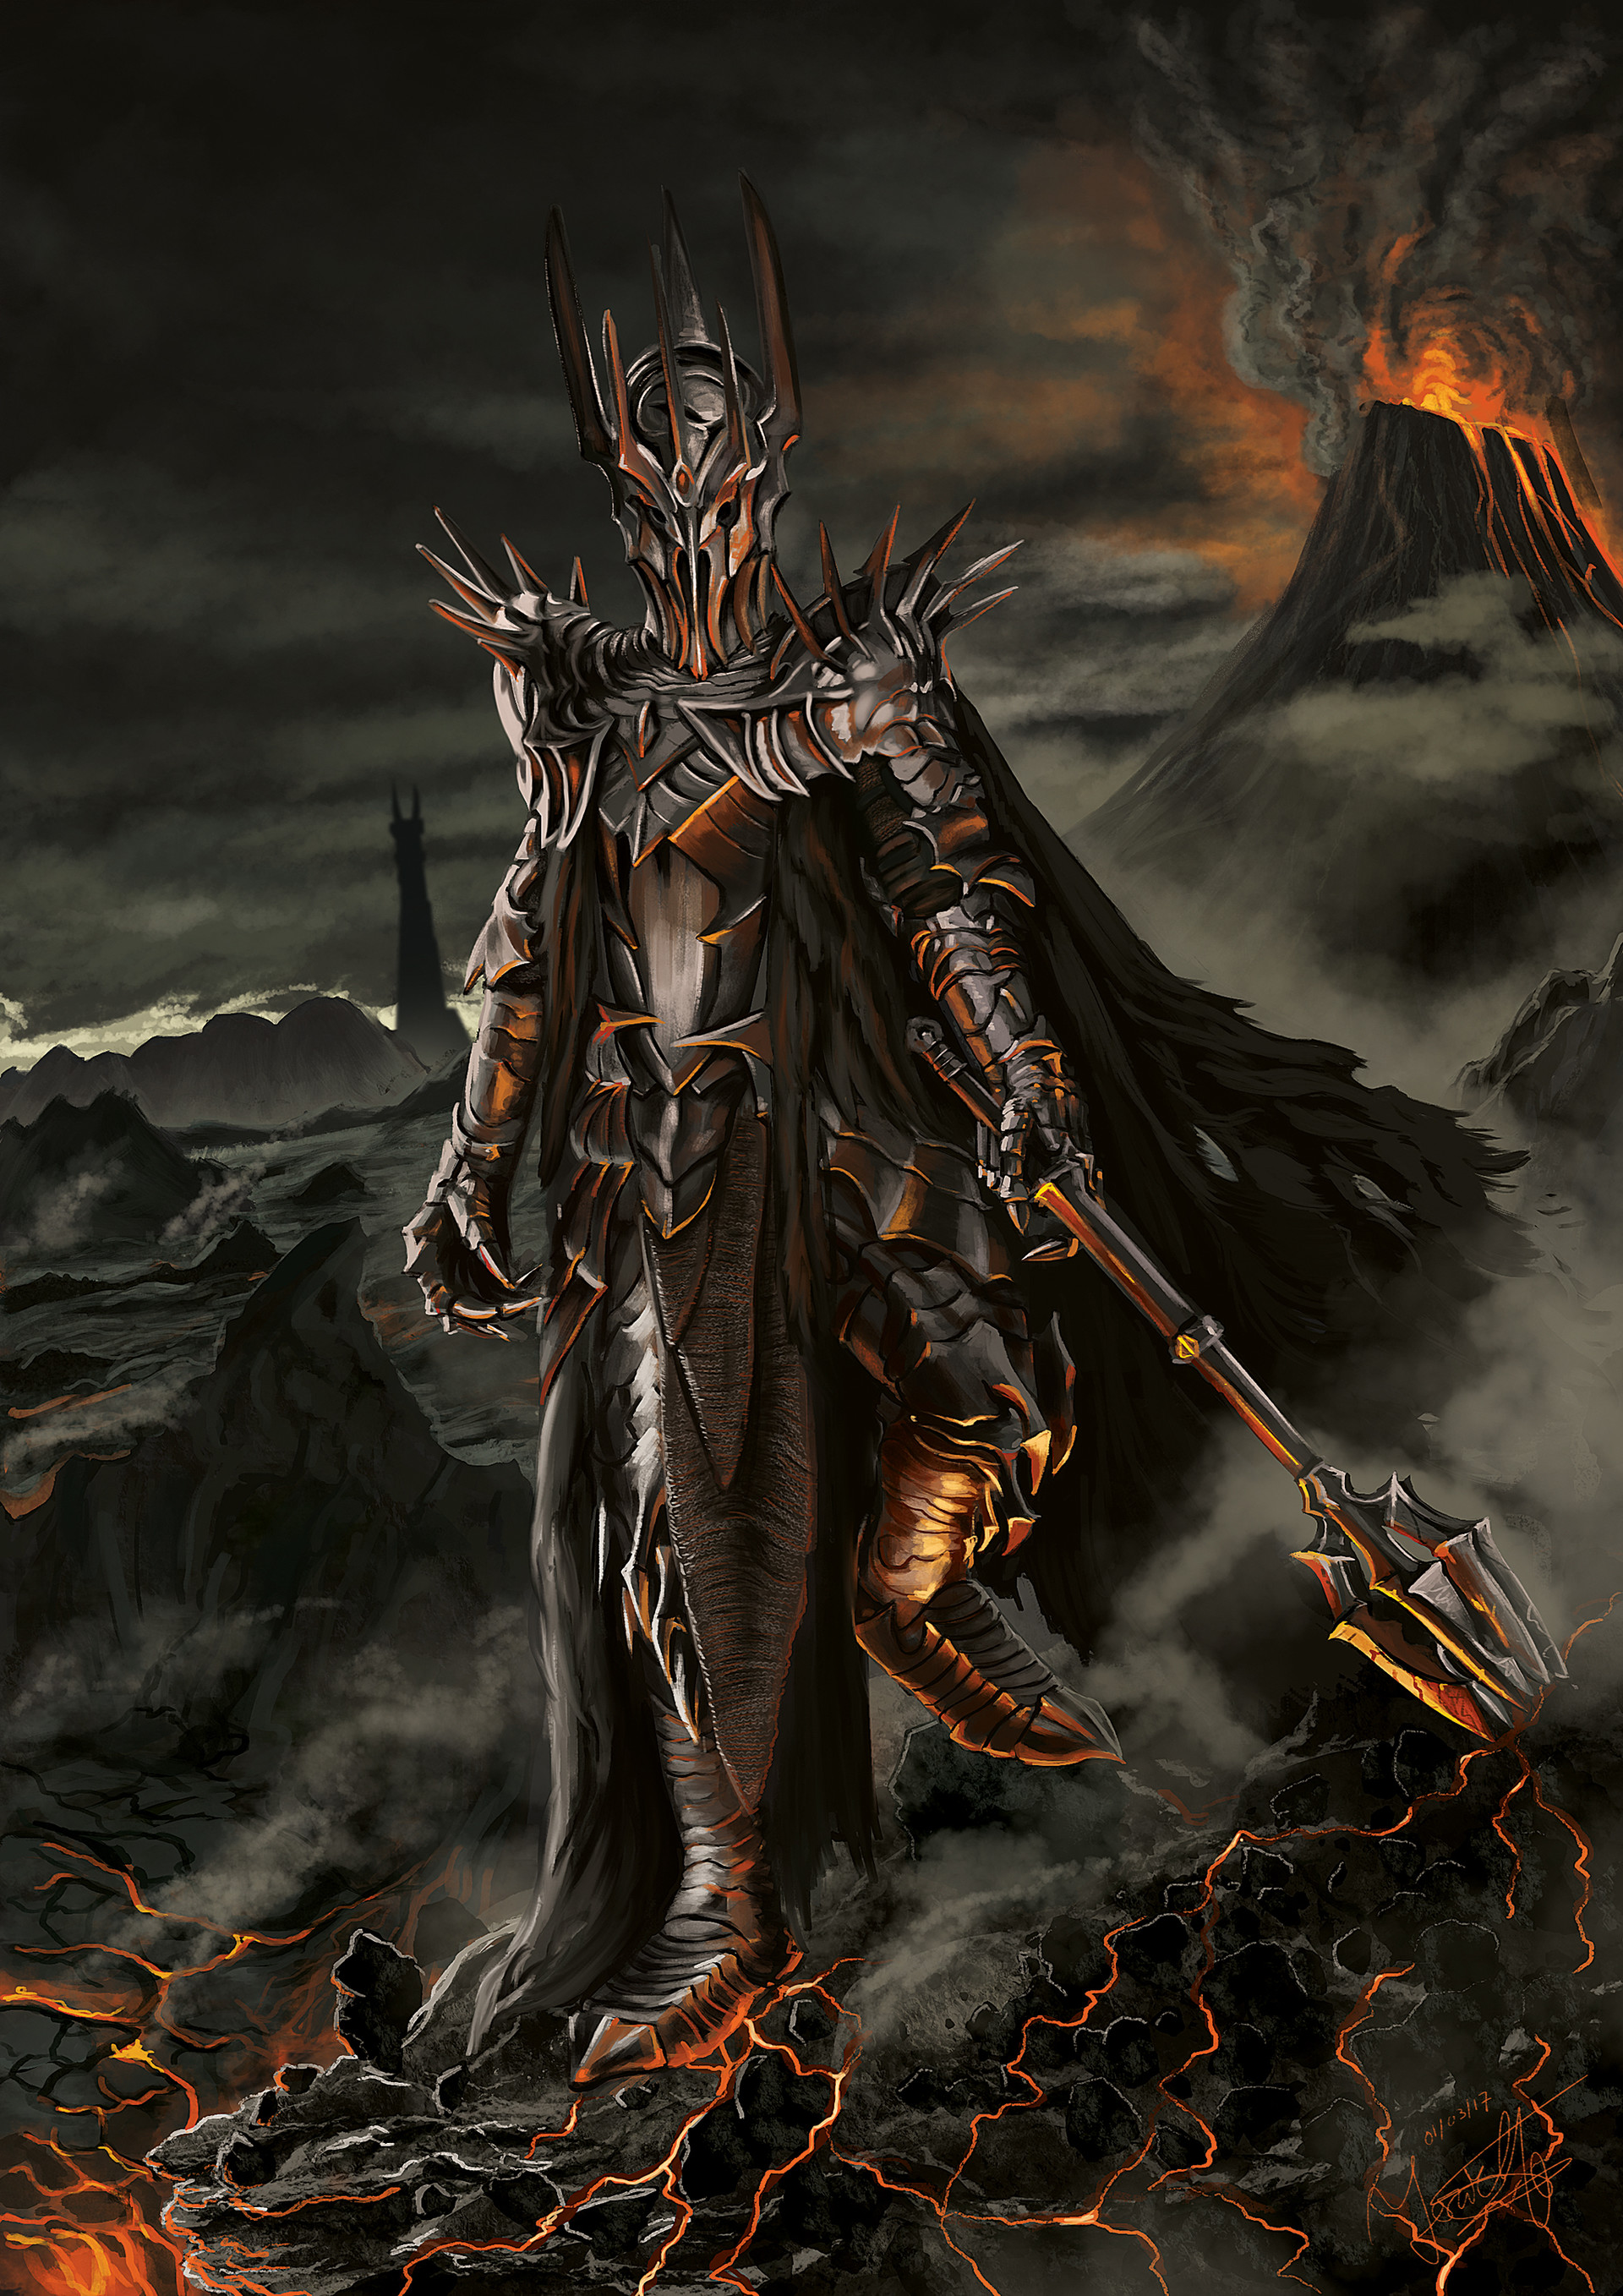  Sauron By Jaoric Koghee R ImaginaryMiddleEarth